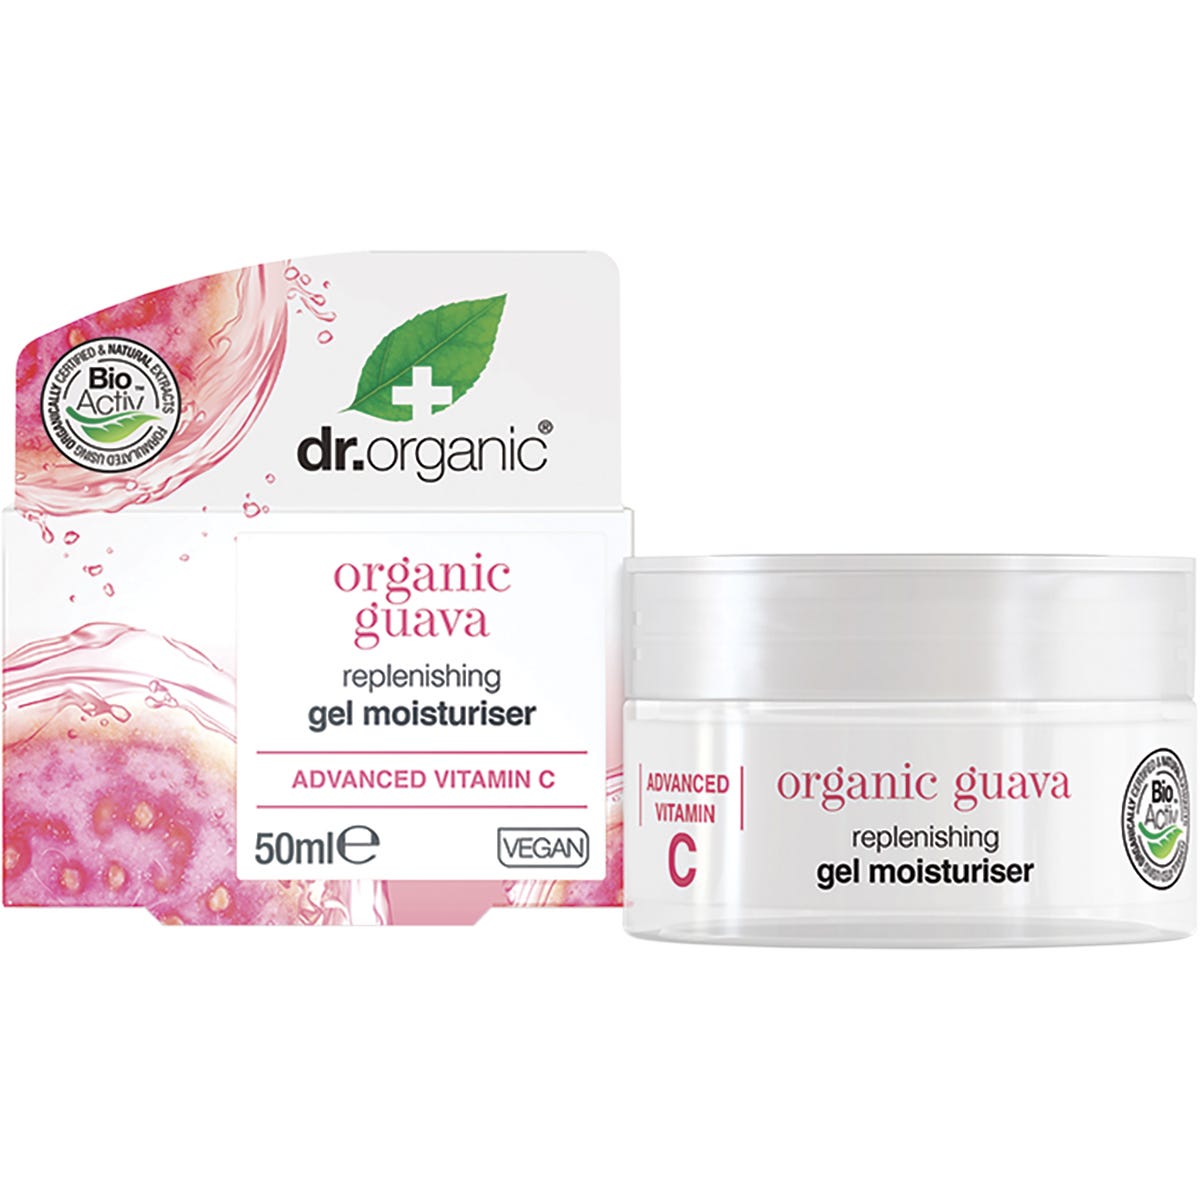 Dr Organic Gel Moisturiser Organic Guava 50ml - Dr Earth - Skincare, Bath & Body